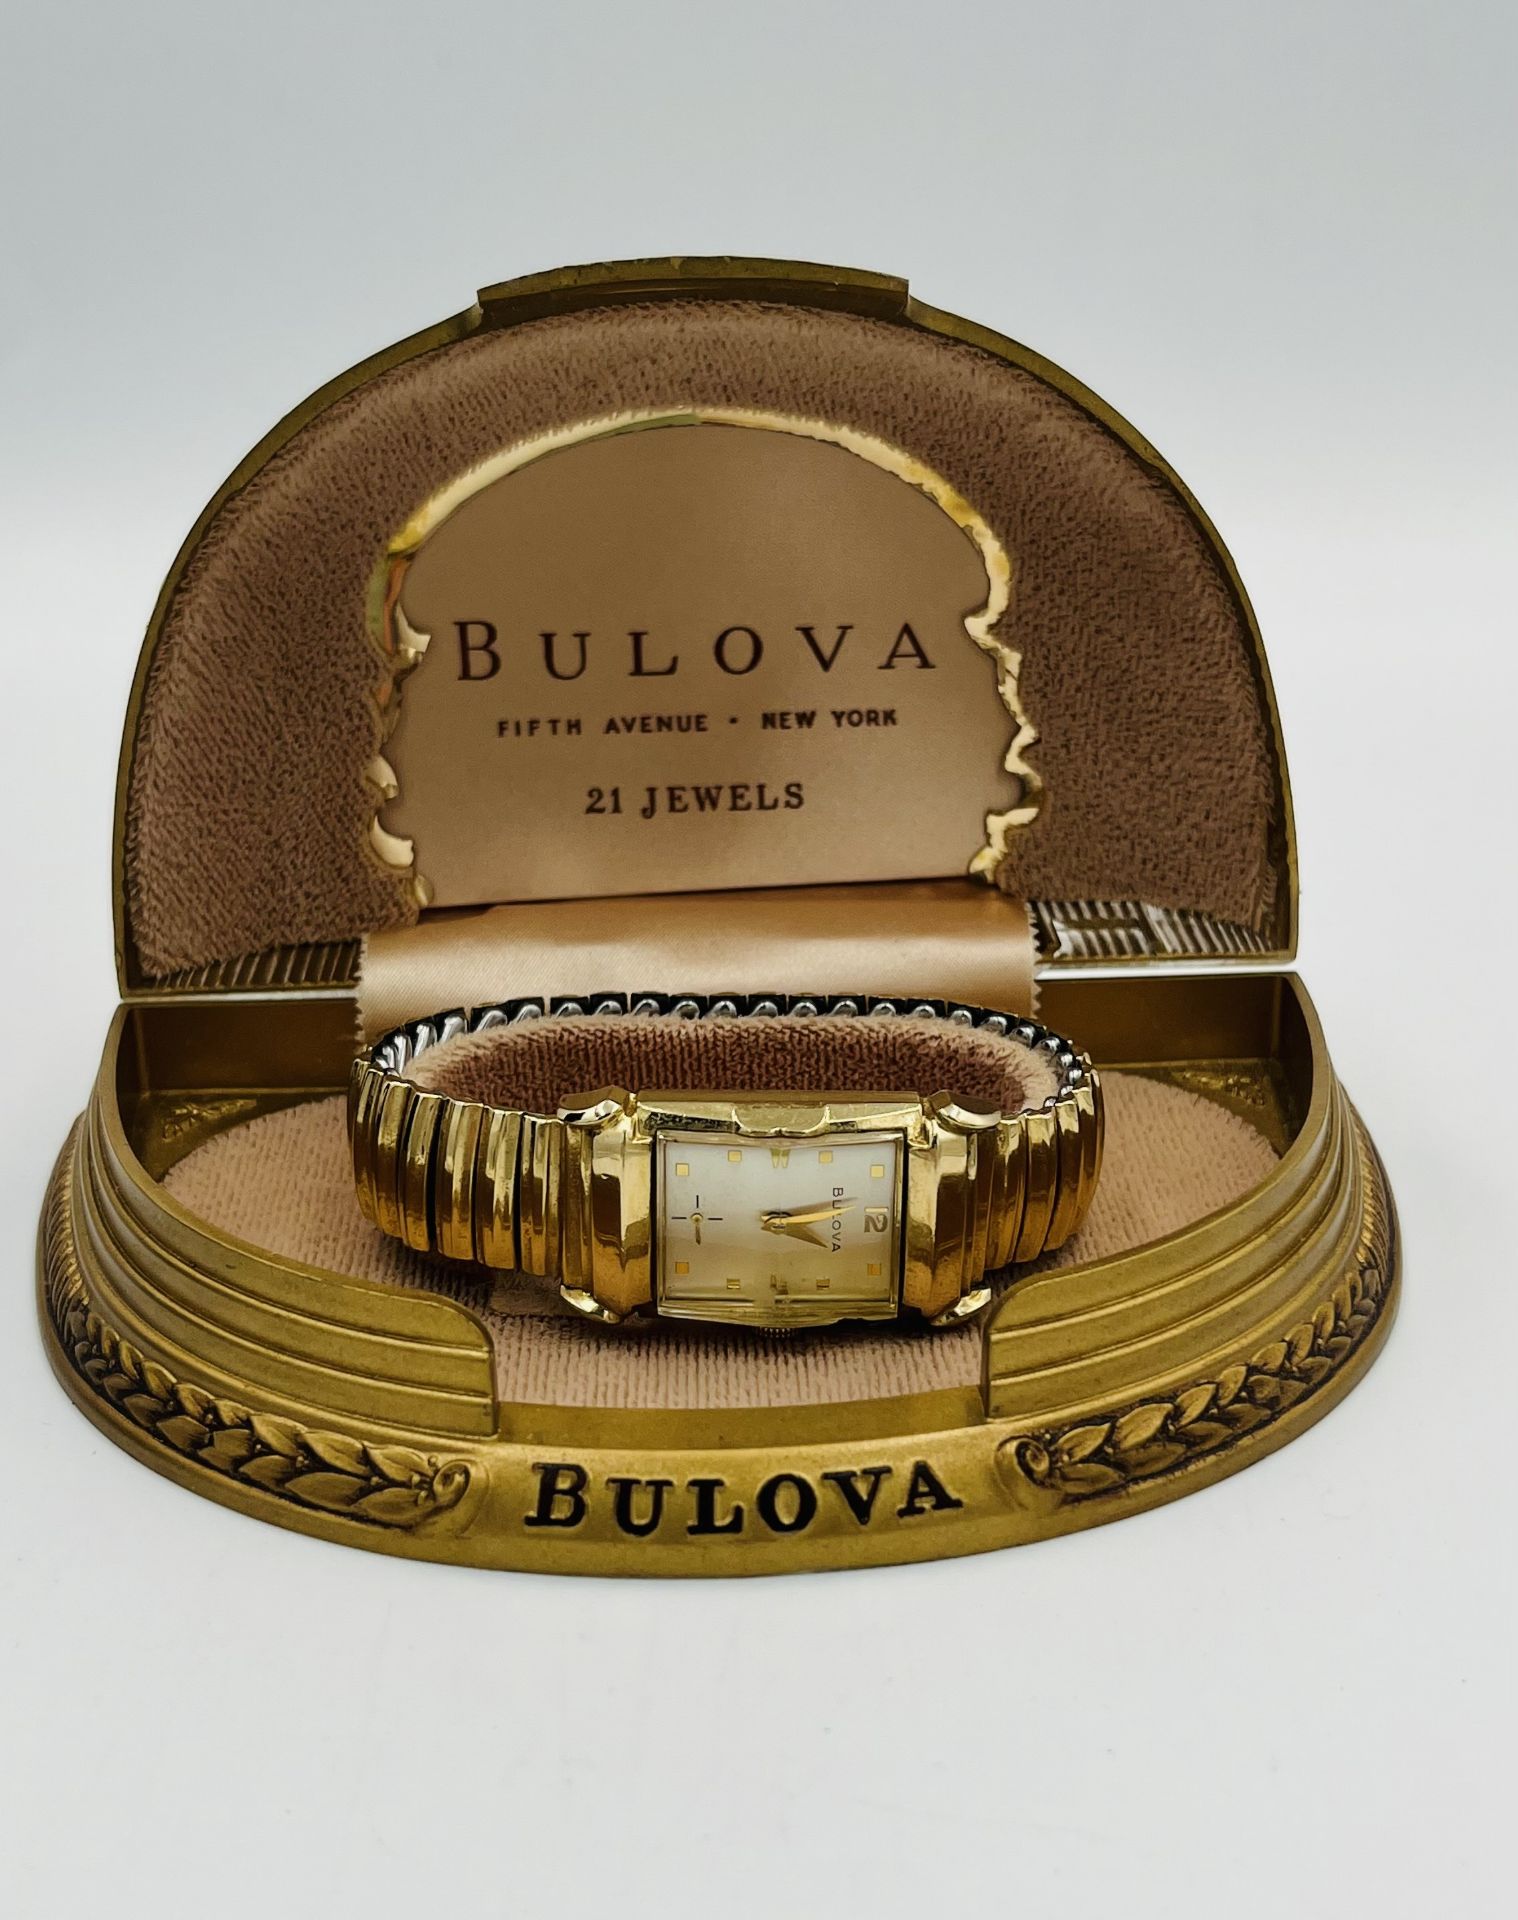 Bulova "tank" style 10k rolled gold cased manual wind wrist watch - Image 7 of 7